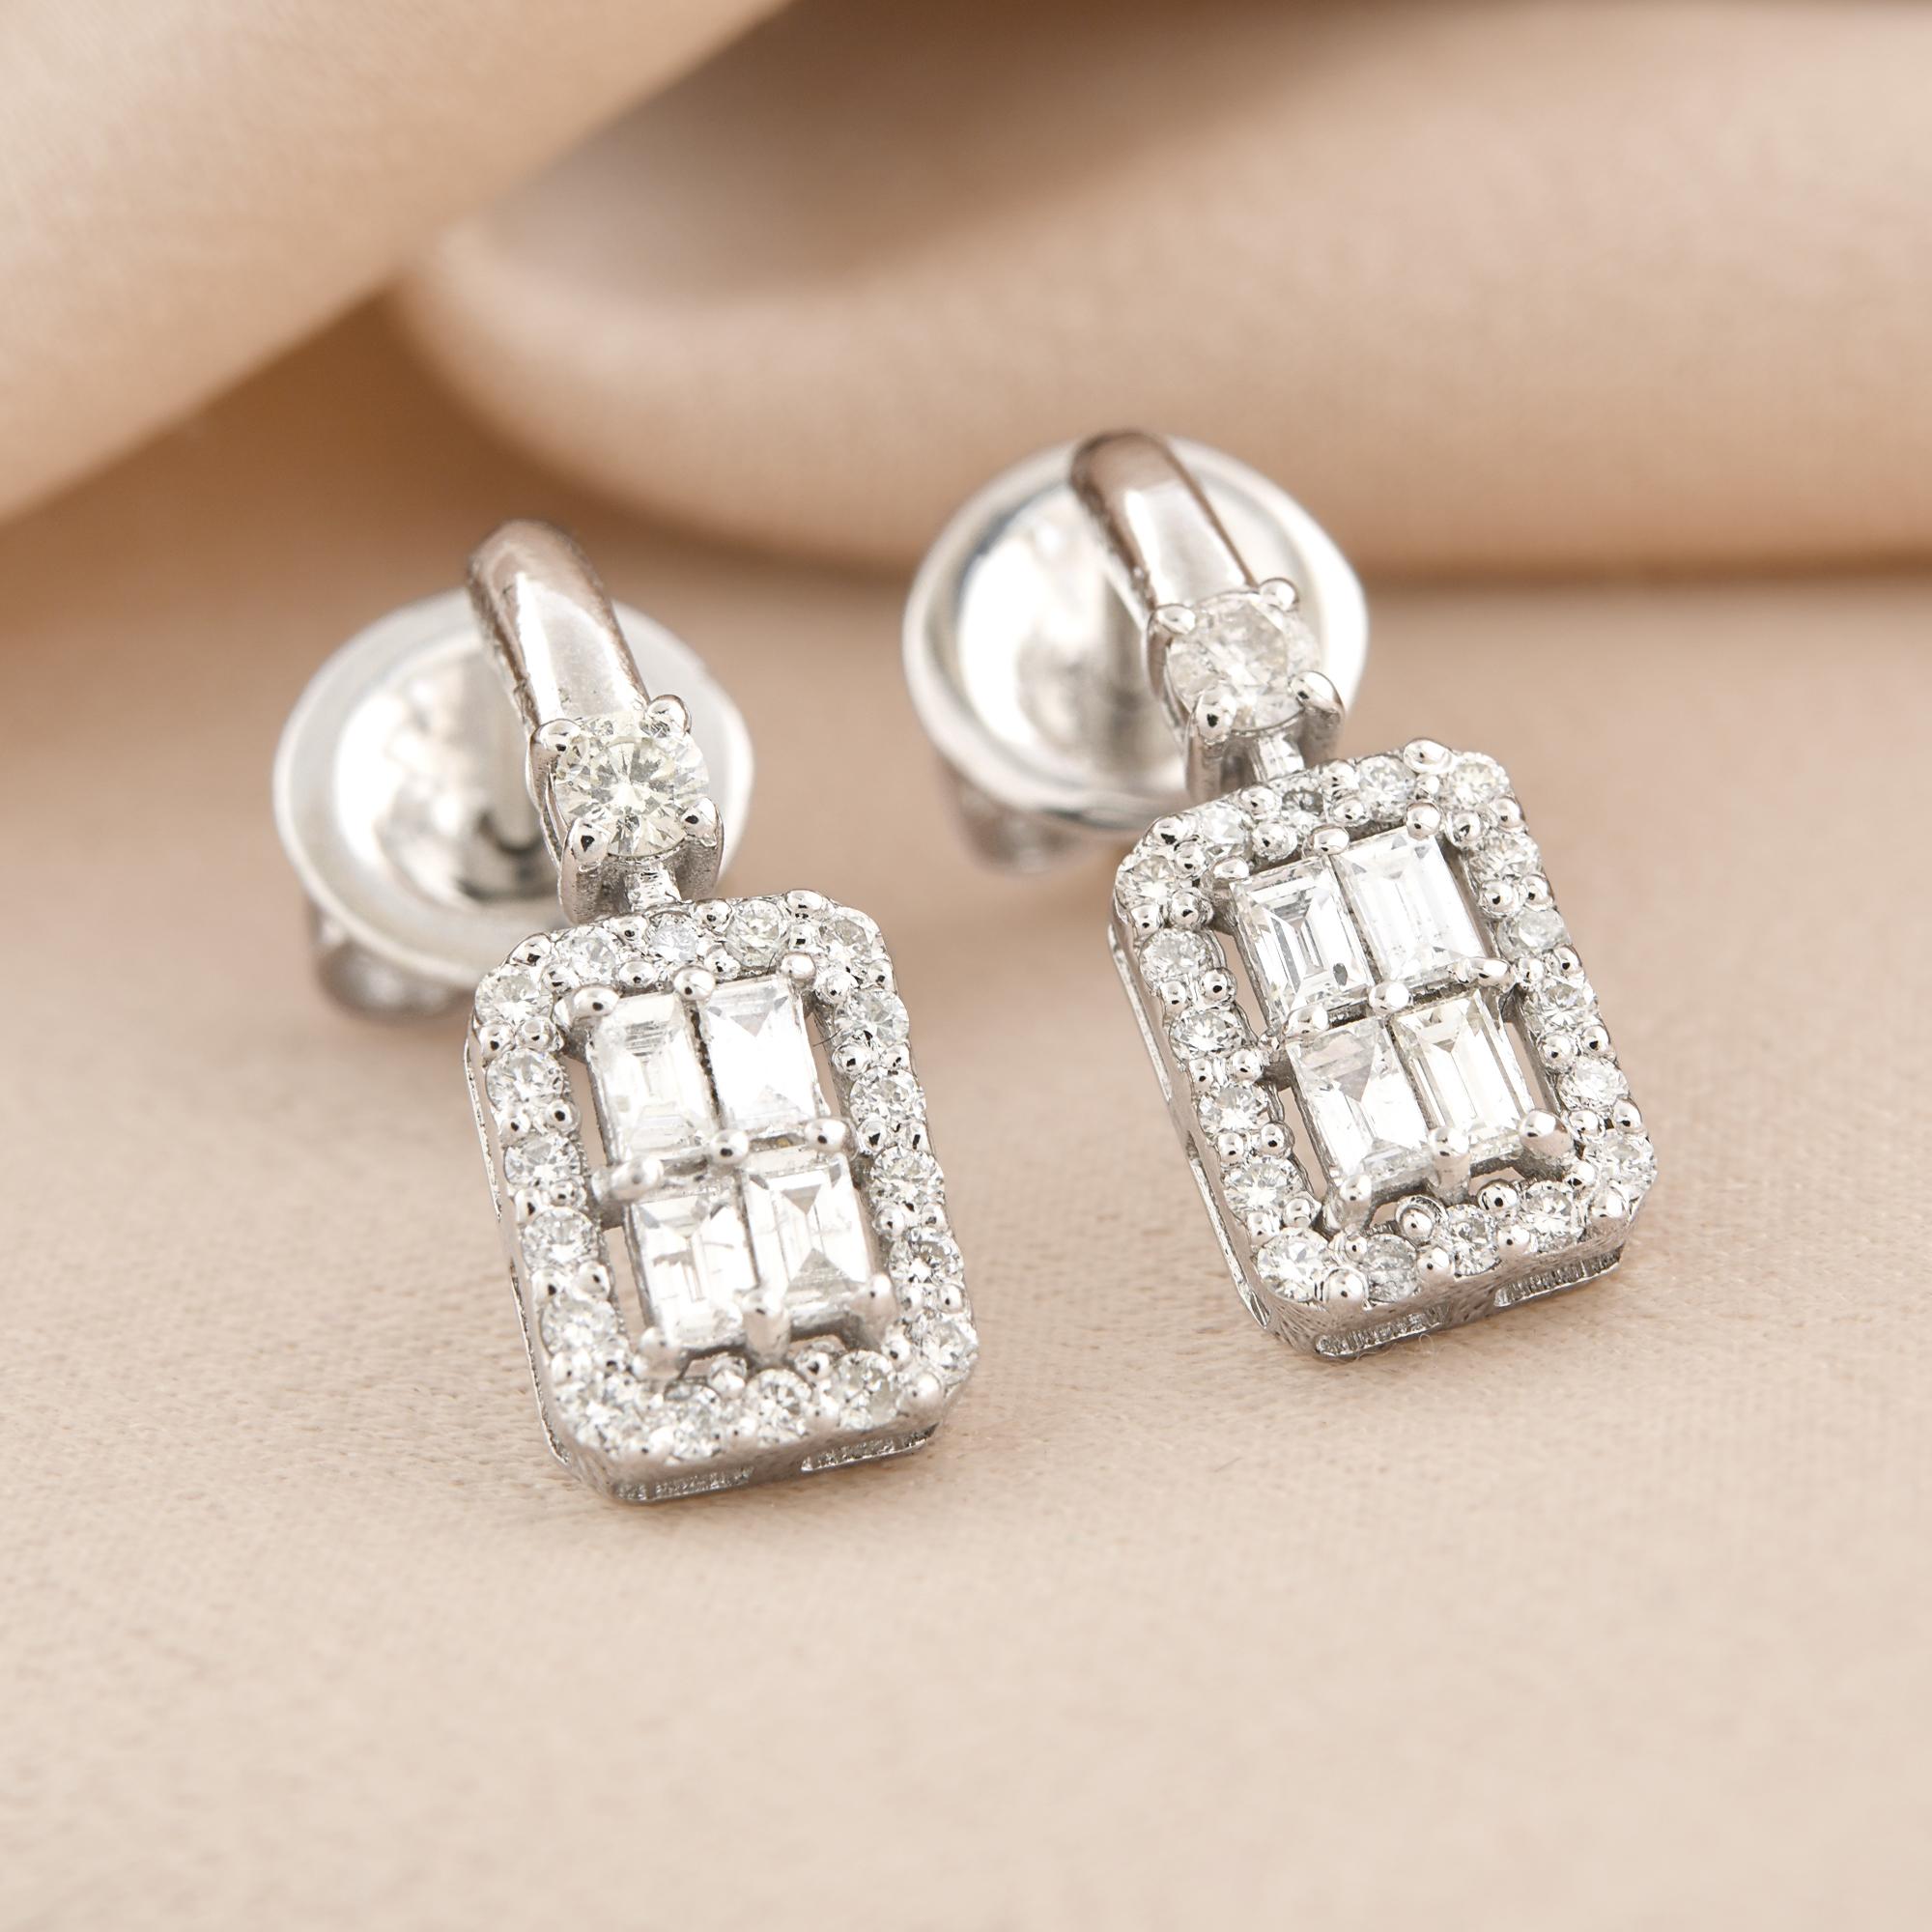 Modern 0.55 Carat Baguette Diamond Stud Earrings Solid 10k White Gold Handmade Jewelry For Sale